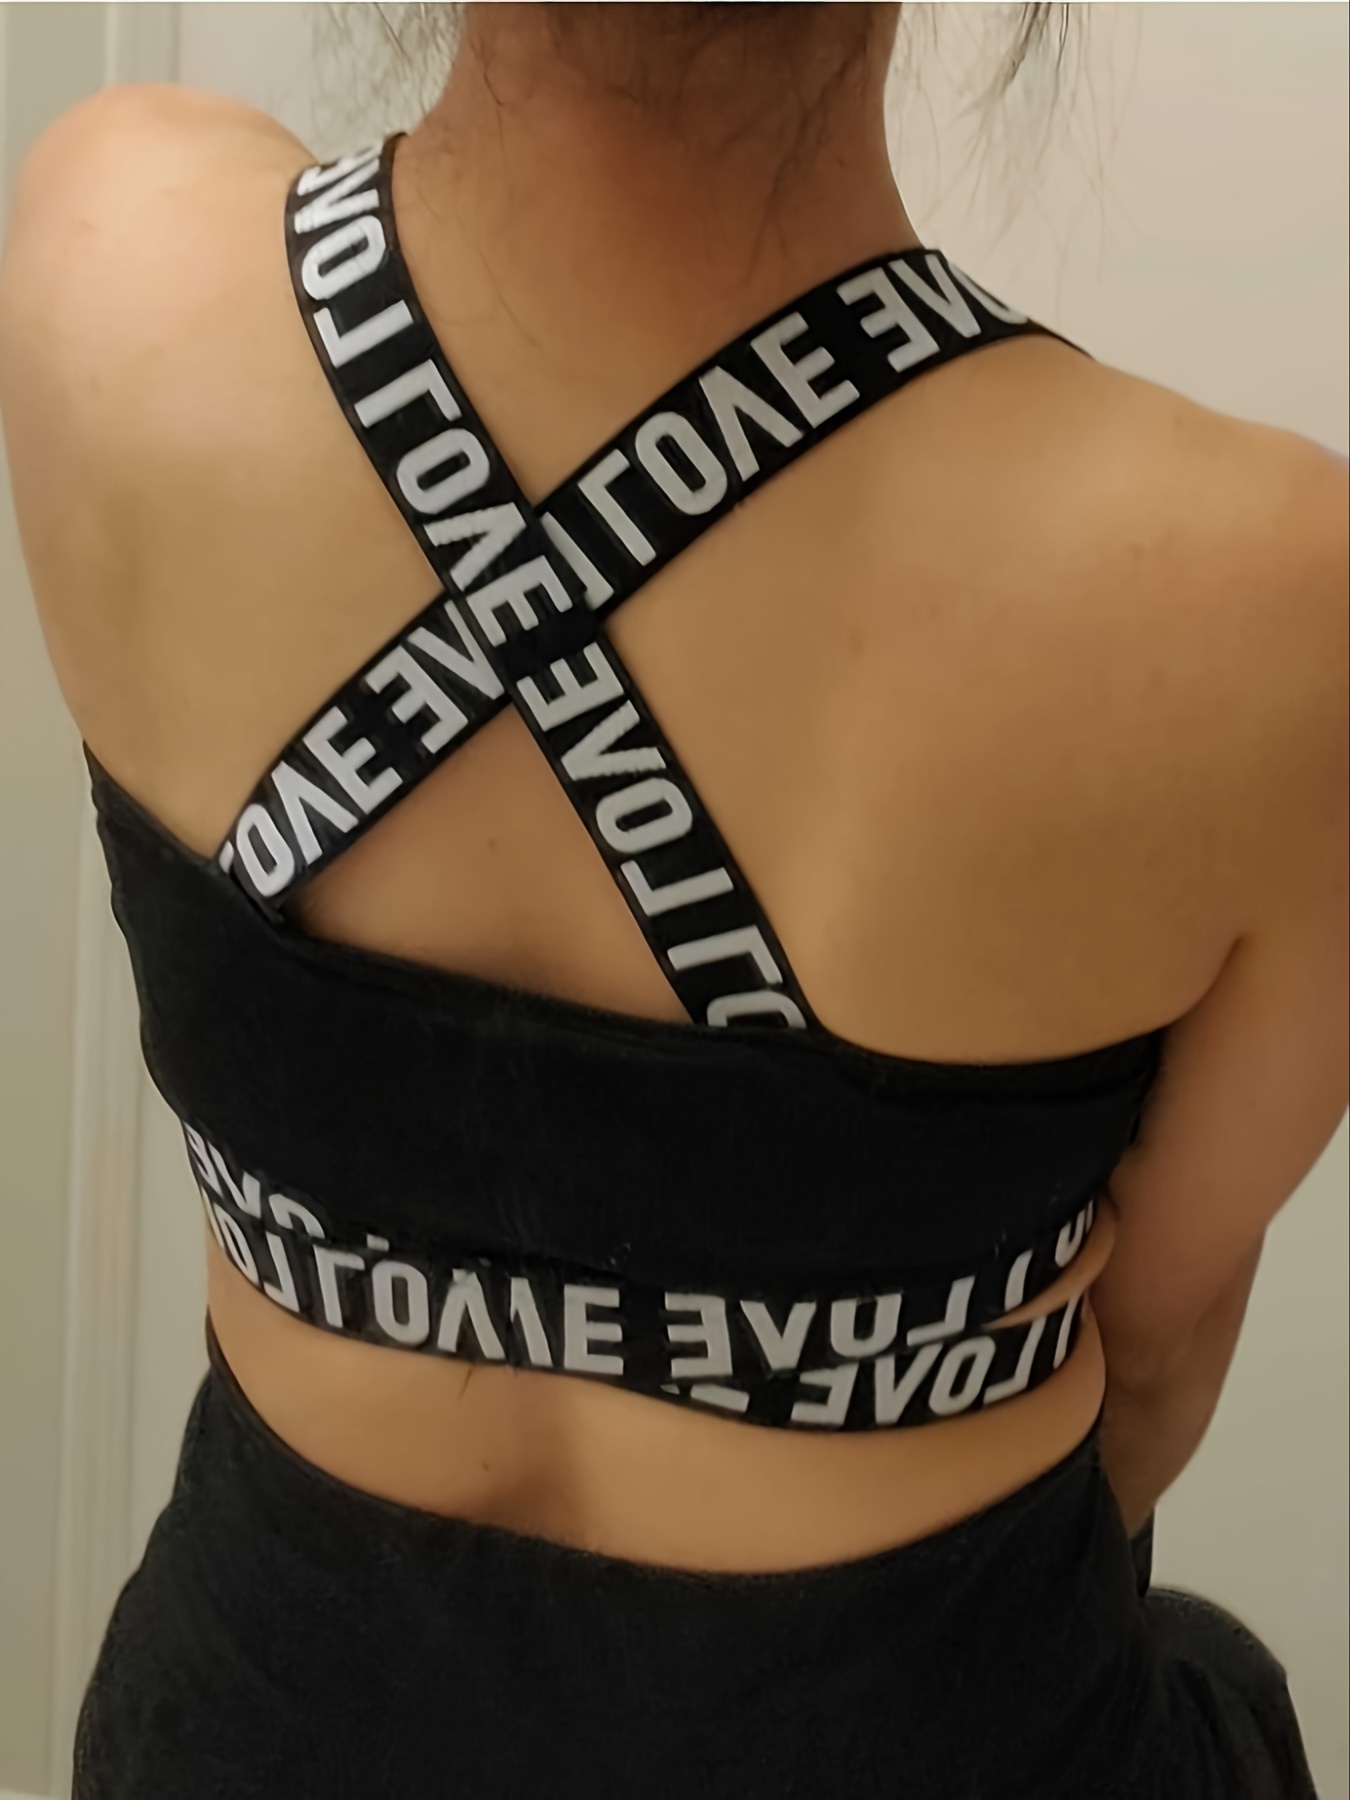 Sexy Sports Bra Women Bras Fitness Running Gym Shirt Push Up